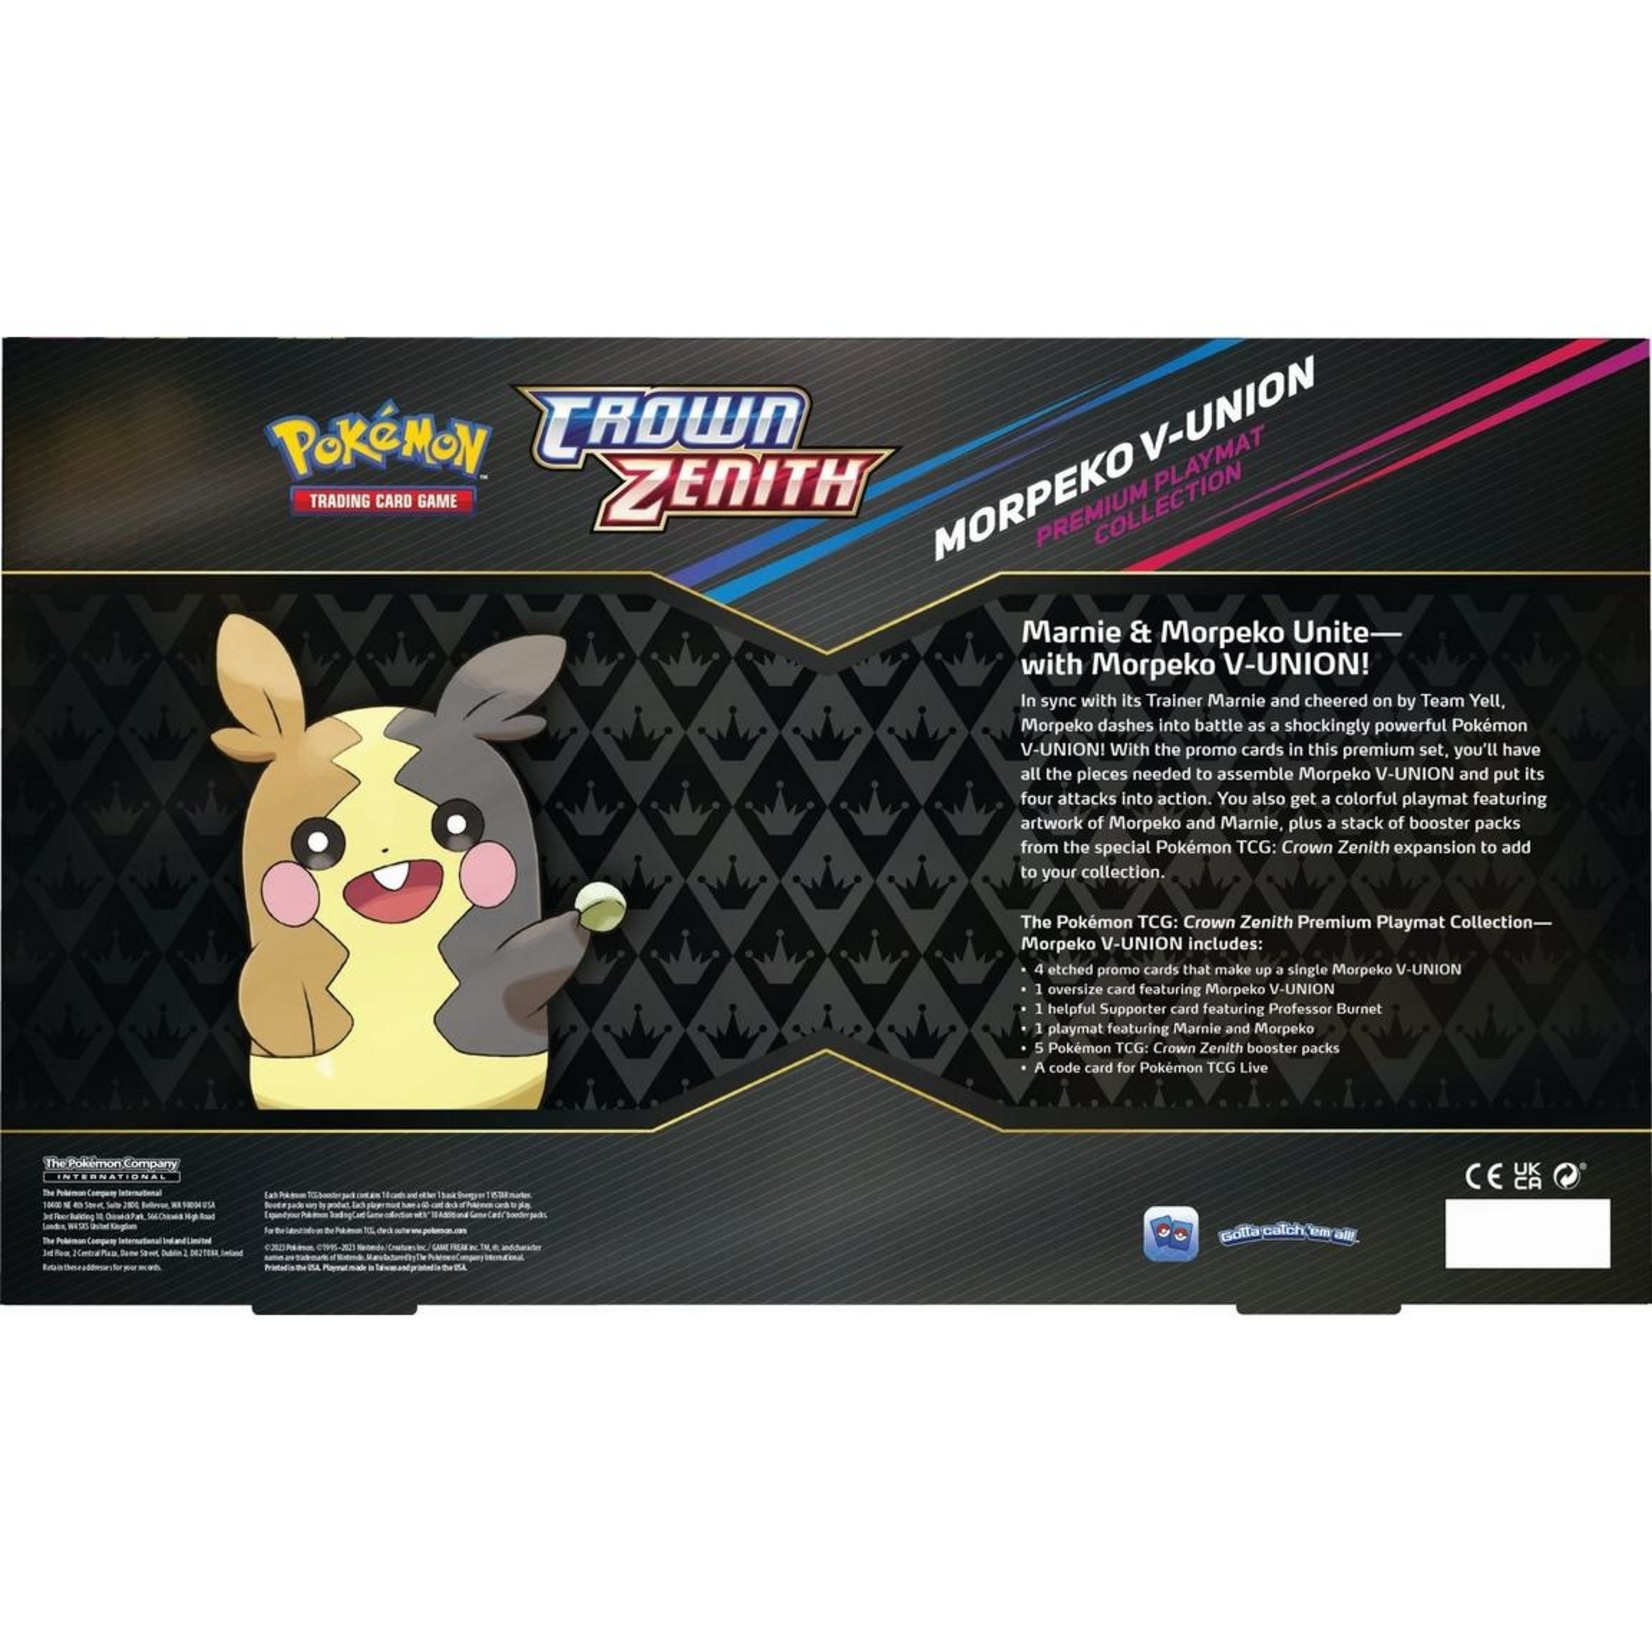 Pokemon Company International Crown Zenith: Morpeko V-Union Playmat Premium Collection